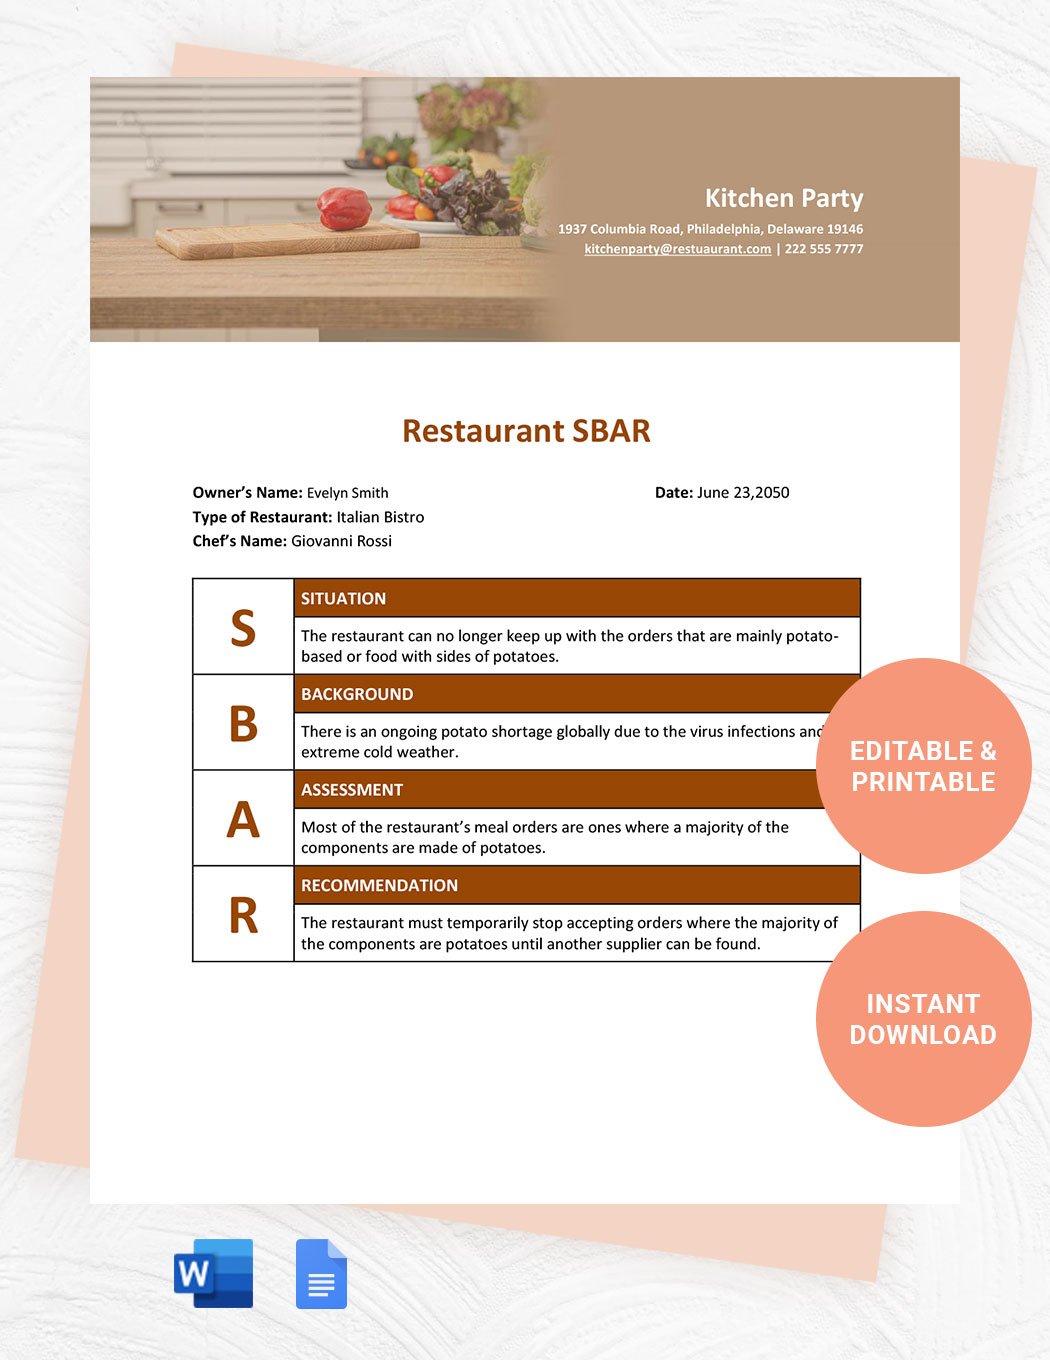 Restaurant SBAR Template in Word, Google Docs